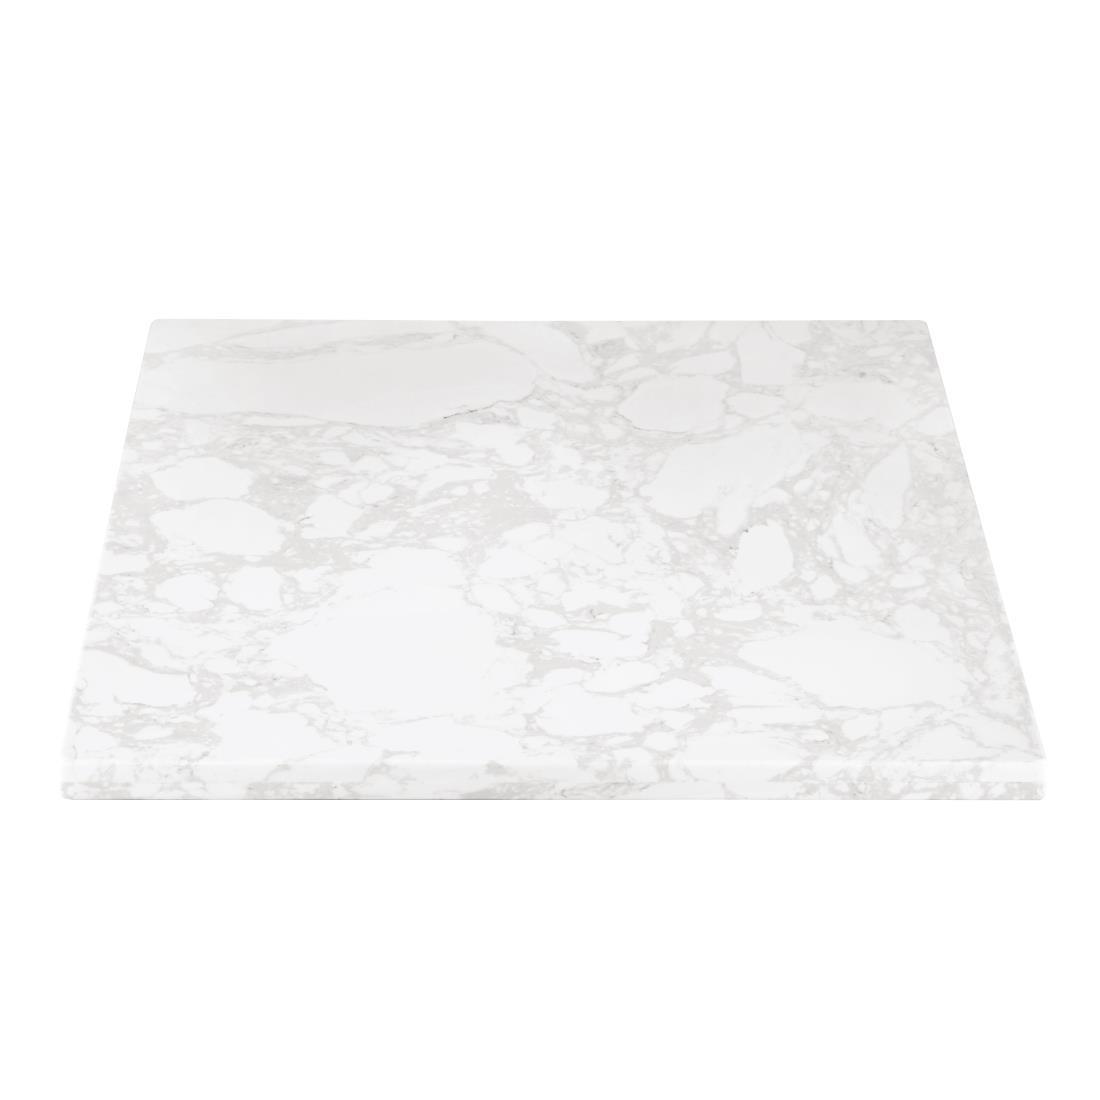 Bolero Square Marble Effect Table Top White 600mm - DC301  - 3